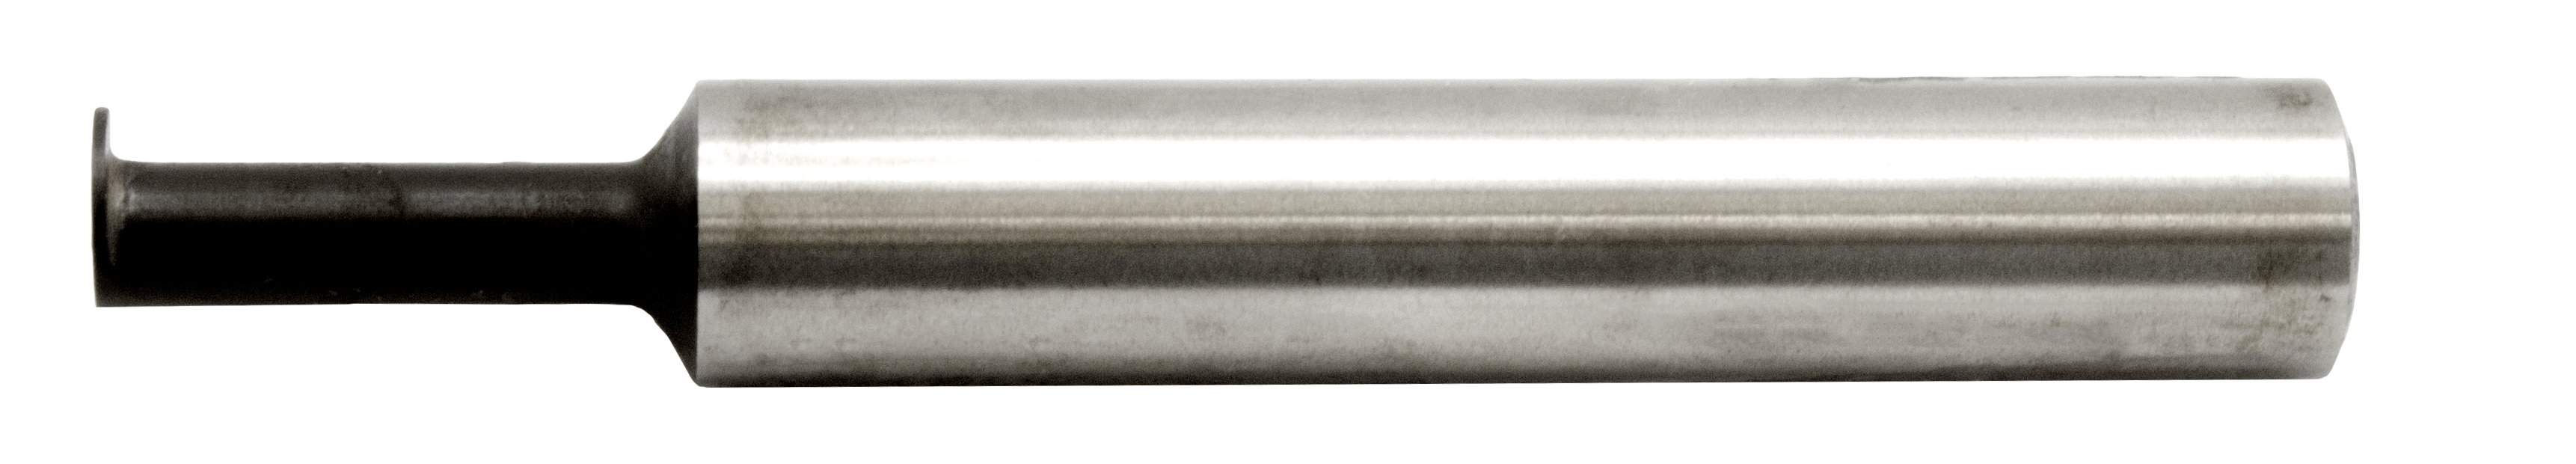 Recessing Tools Long Length 1/2 Shank Carbide Tipped